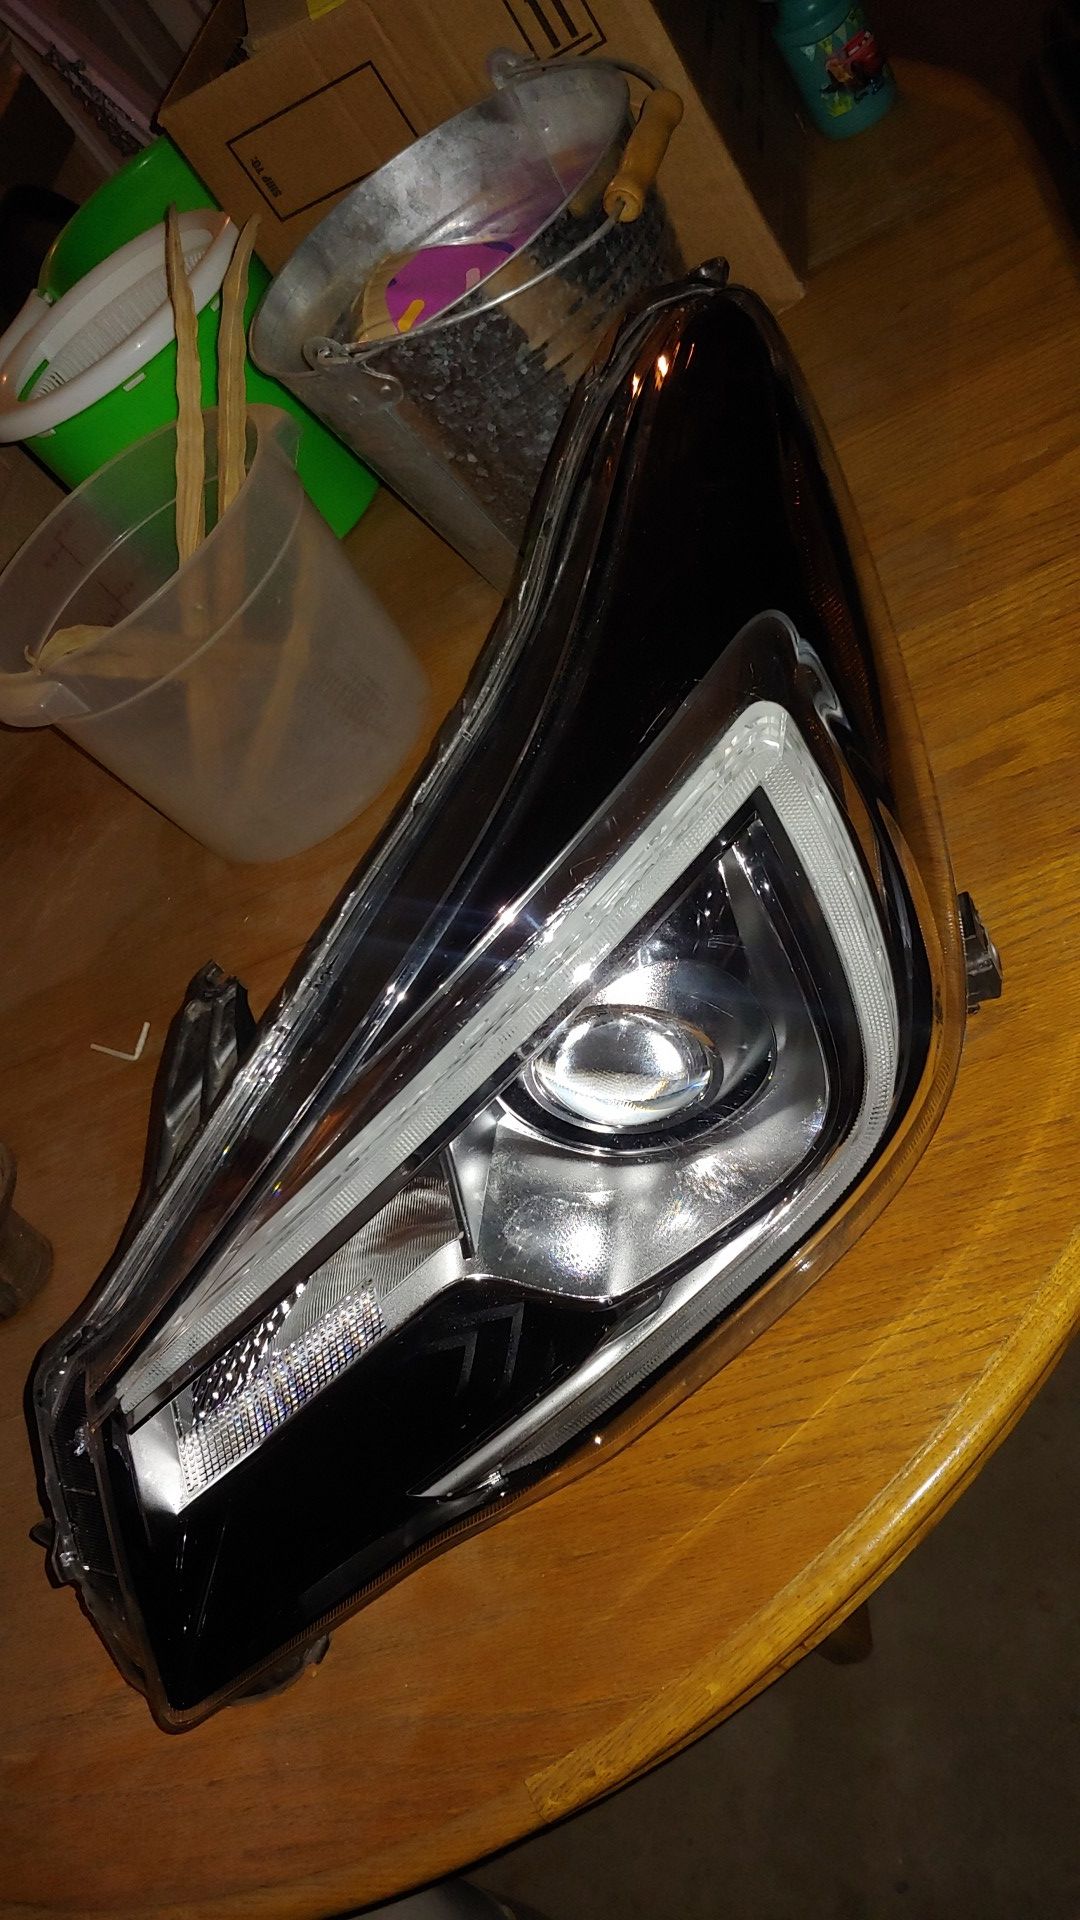 2018 Subaru forester headlight